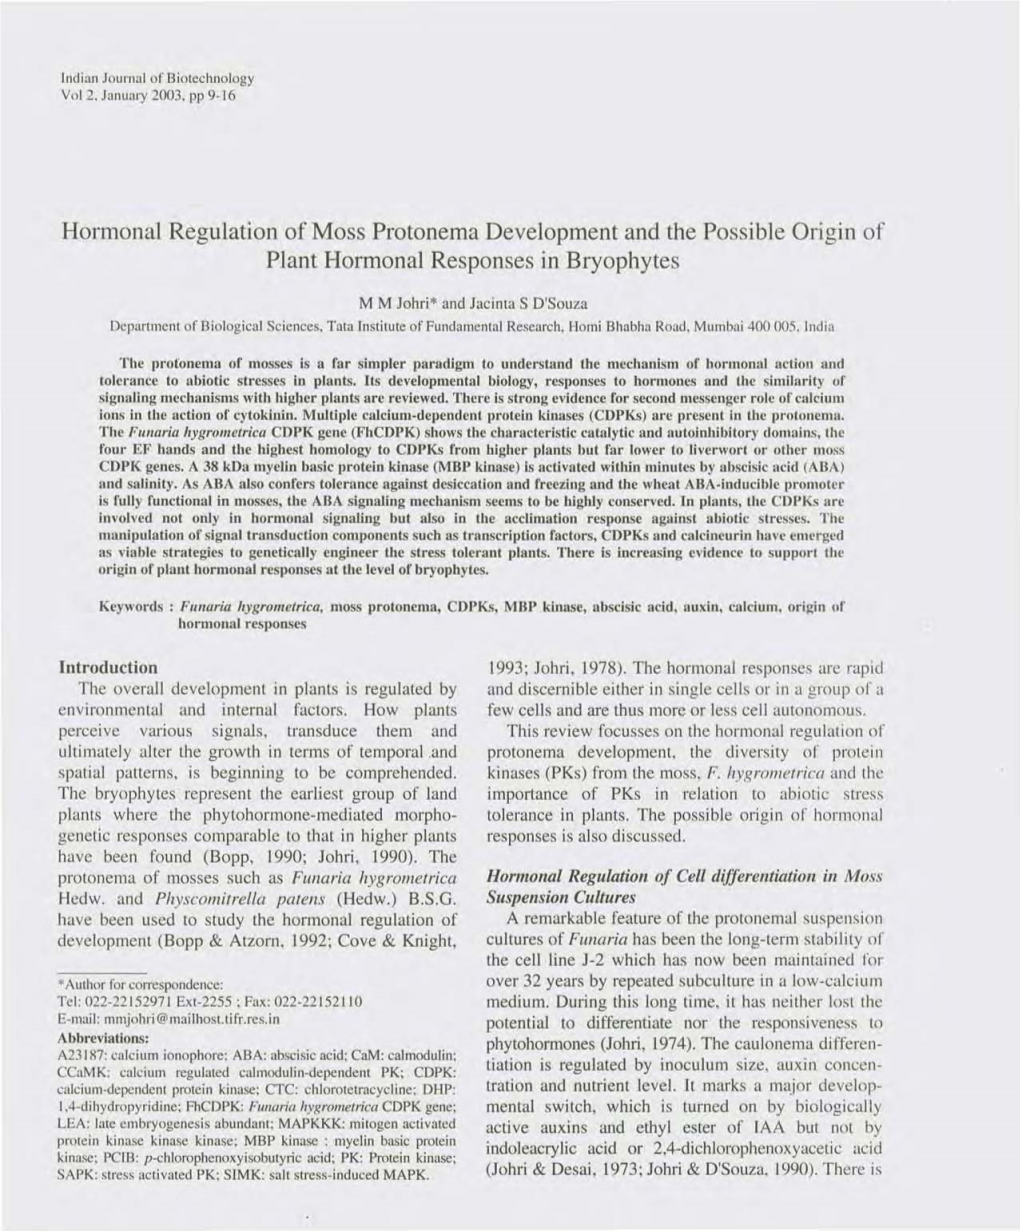 Hormonal Regulation of Moss Protonema Development and the Possible Origin of Plant Hormonal Responses in Bryophytes